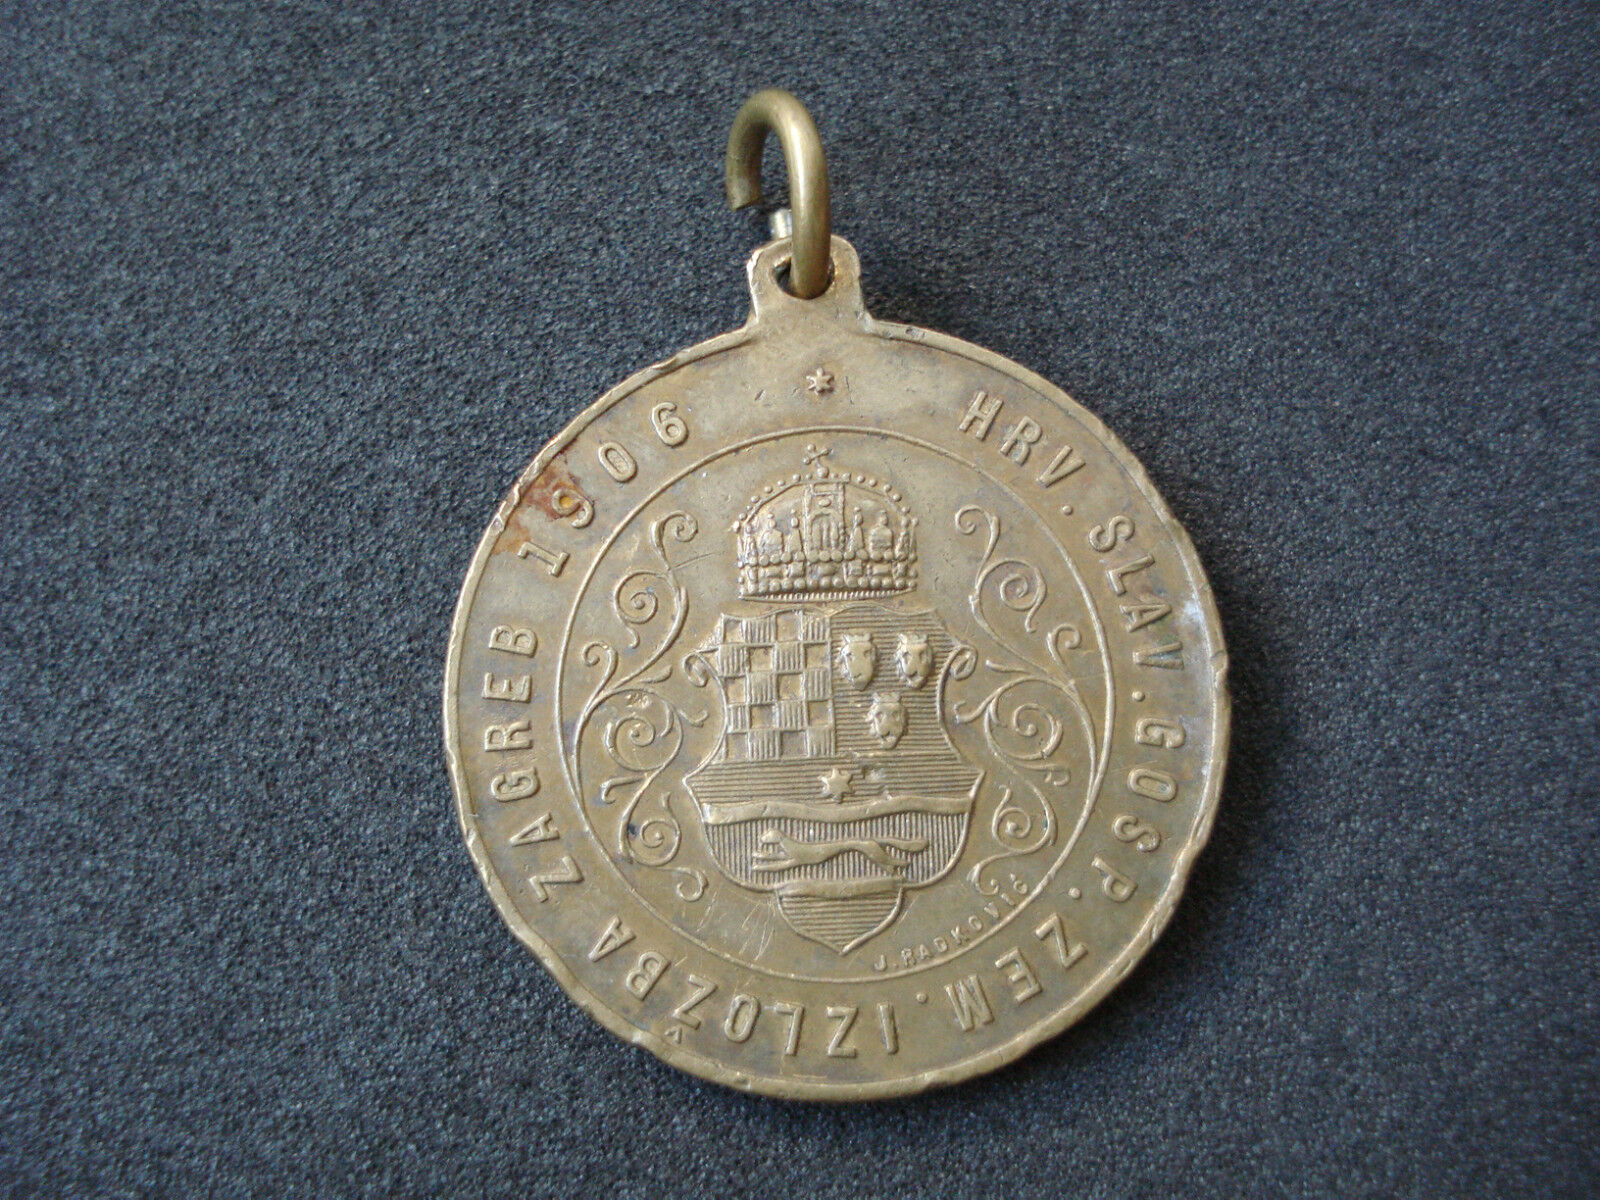 Croatia - Zagreb, Agriculture exhibition 1906 - rare medal; farming, husbandry